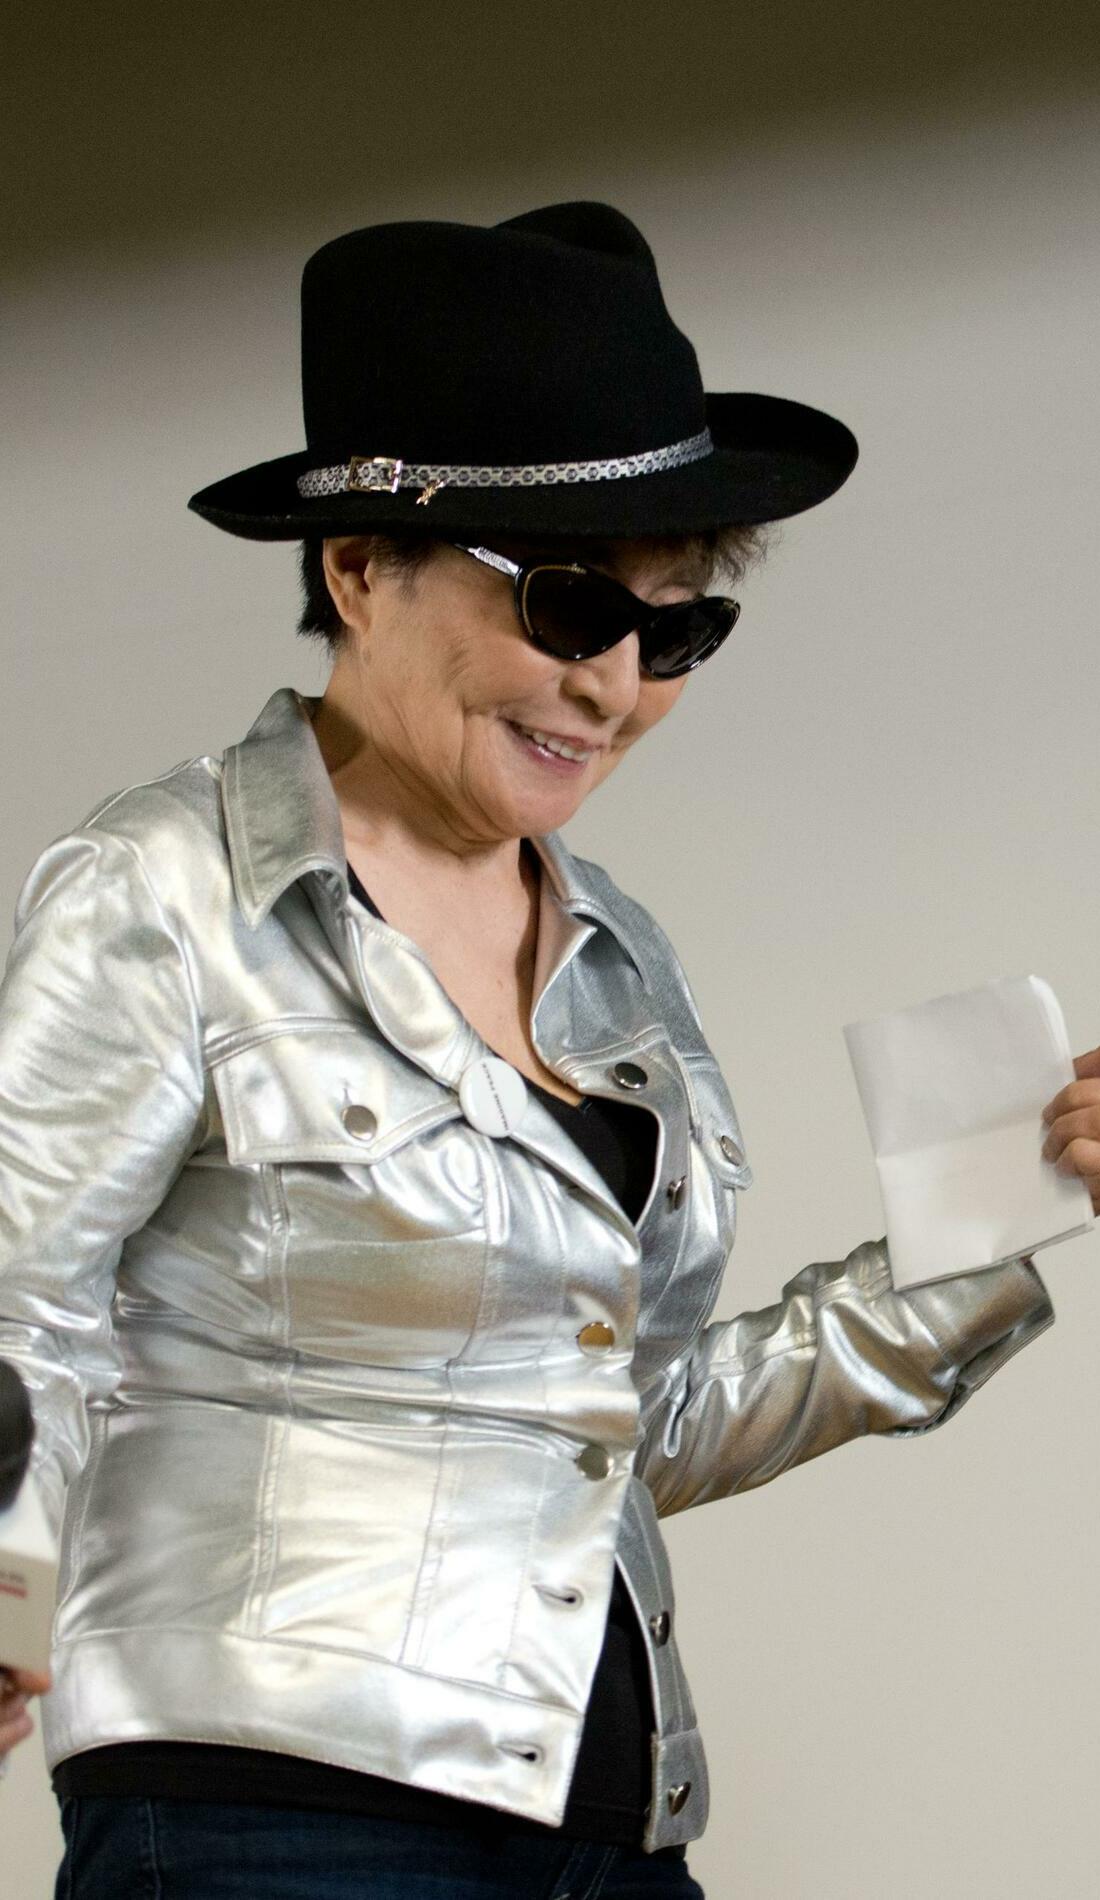 A Yoko Ono live event